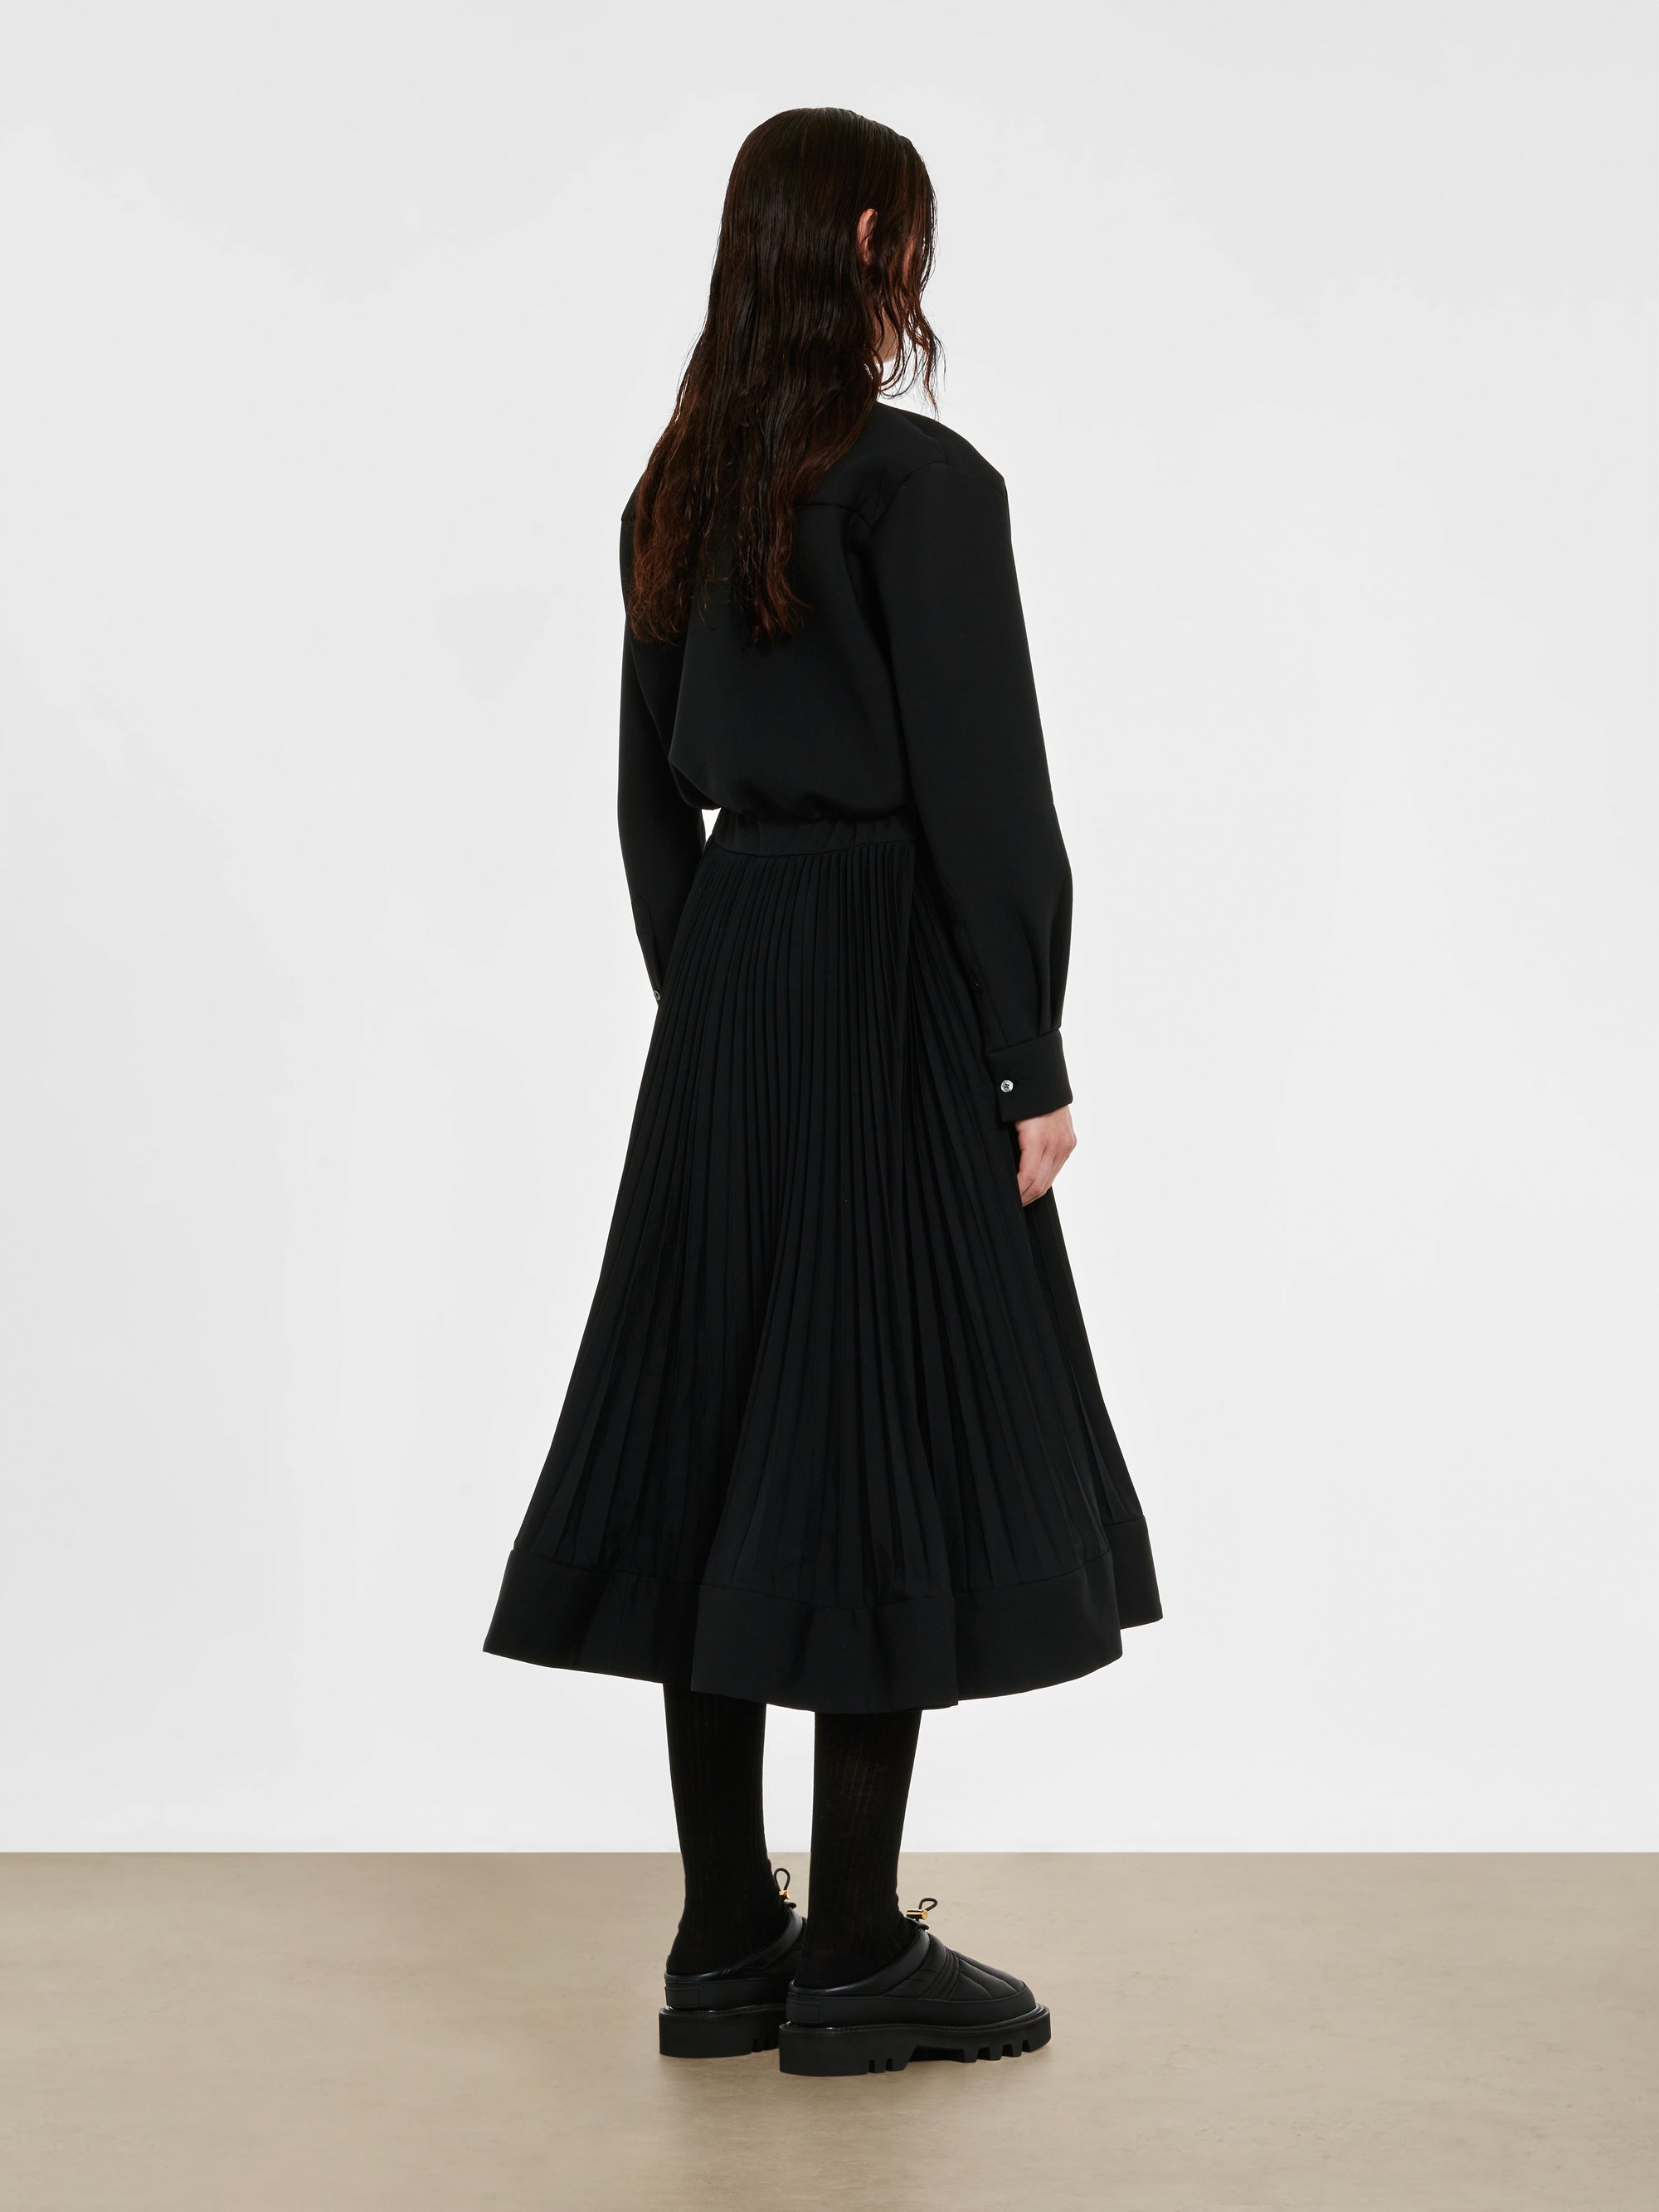 sacai - Women’s Suiting Bonding Dress - (Black) view 3